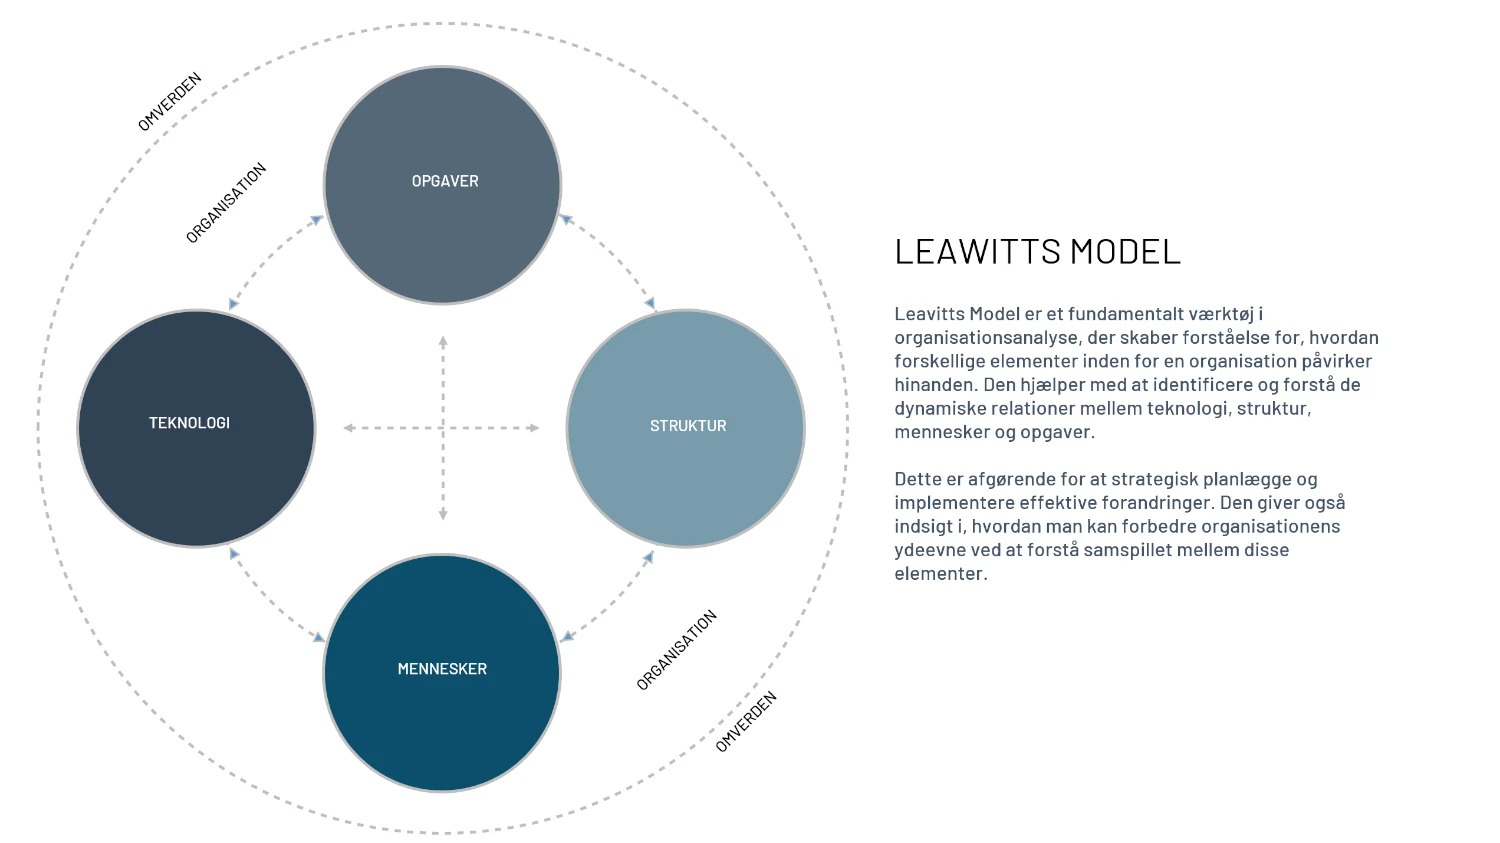 Leawitts model